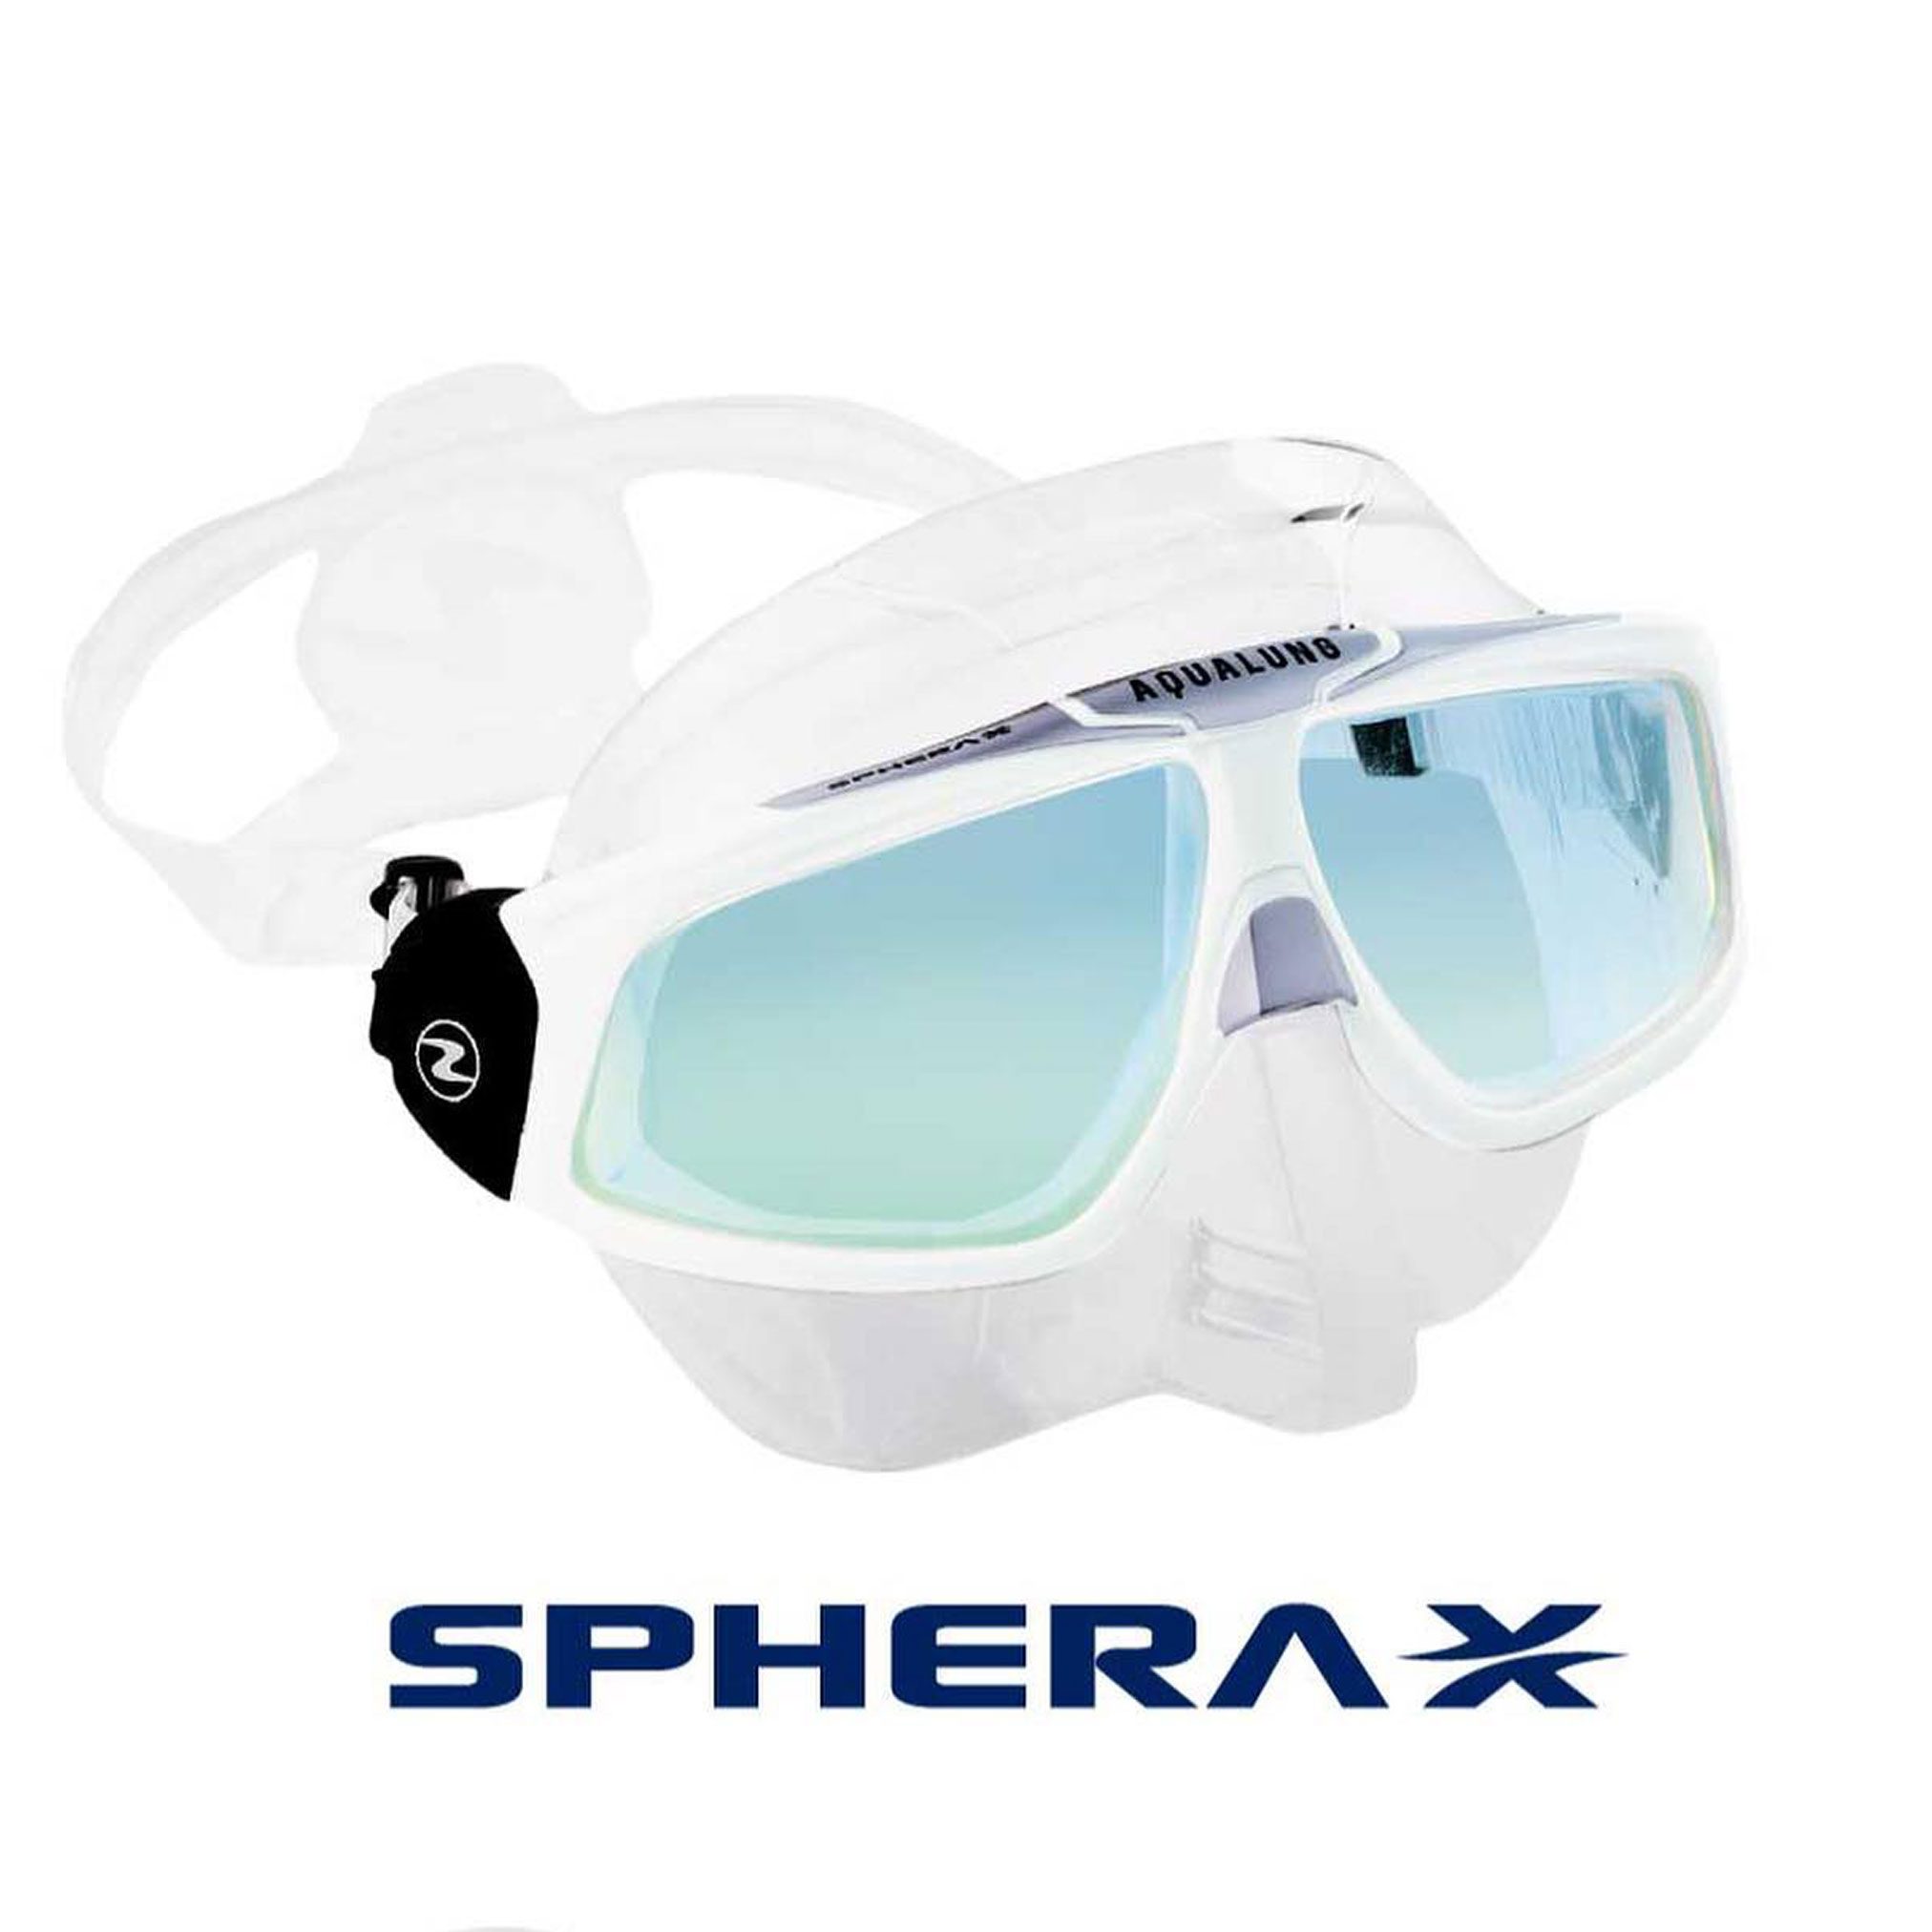 Aqualung Sphera X Mask White Mirror Lens